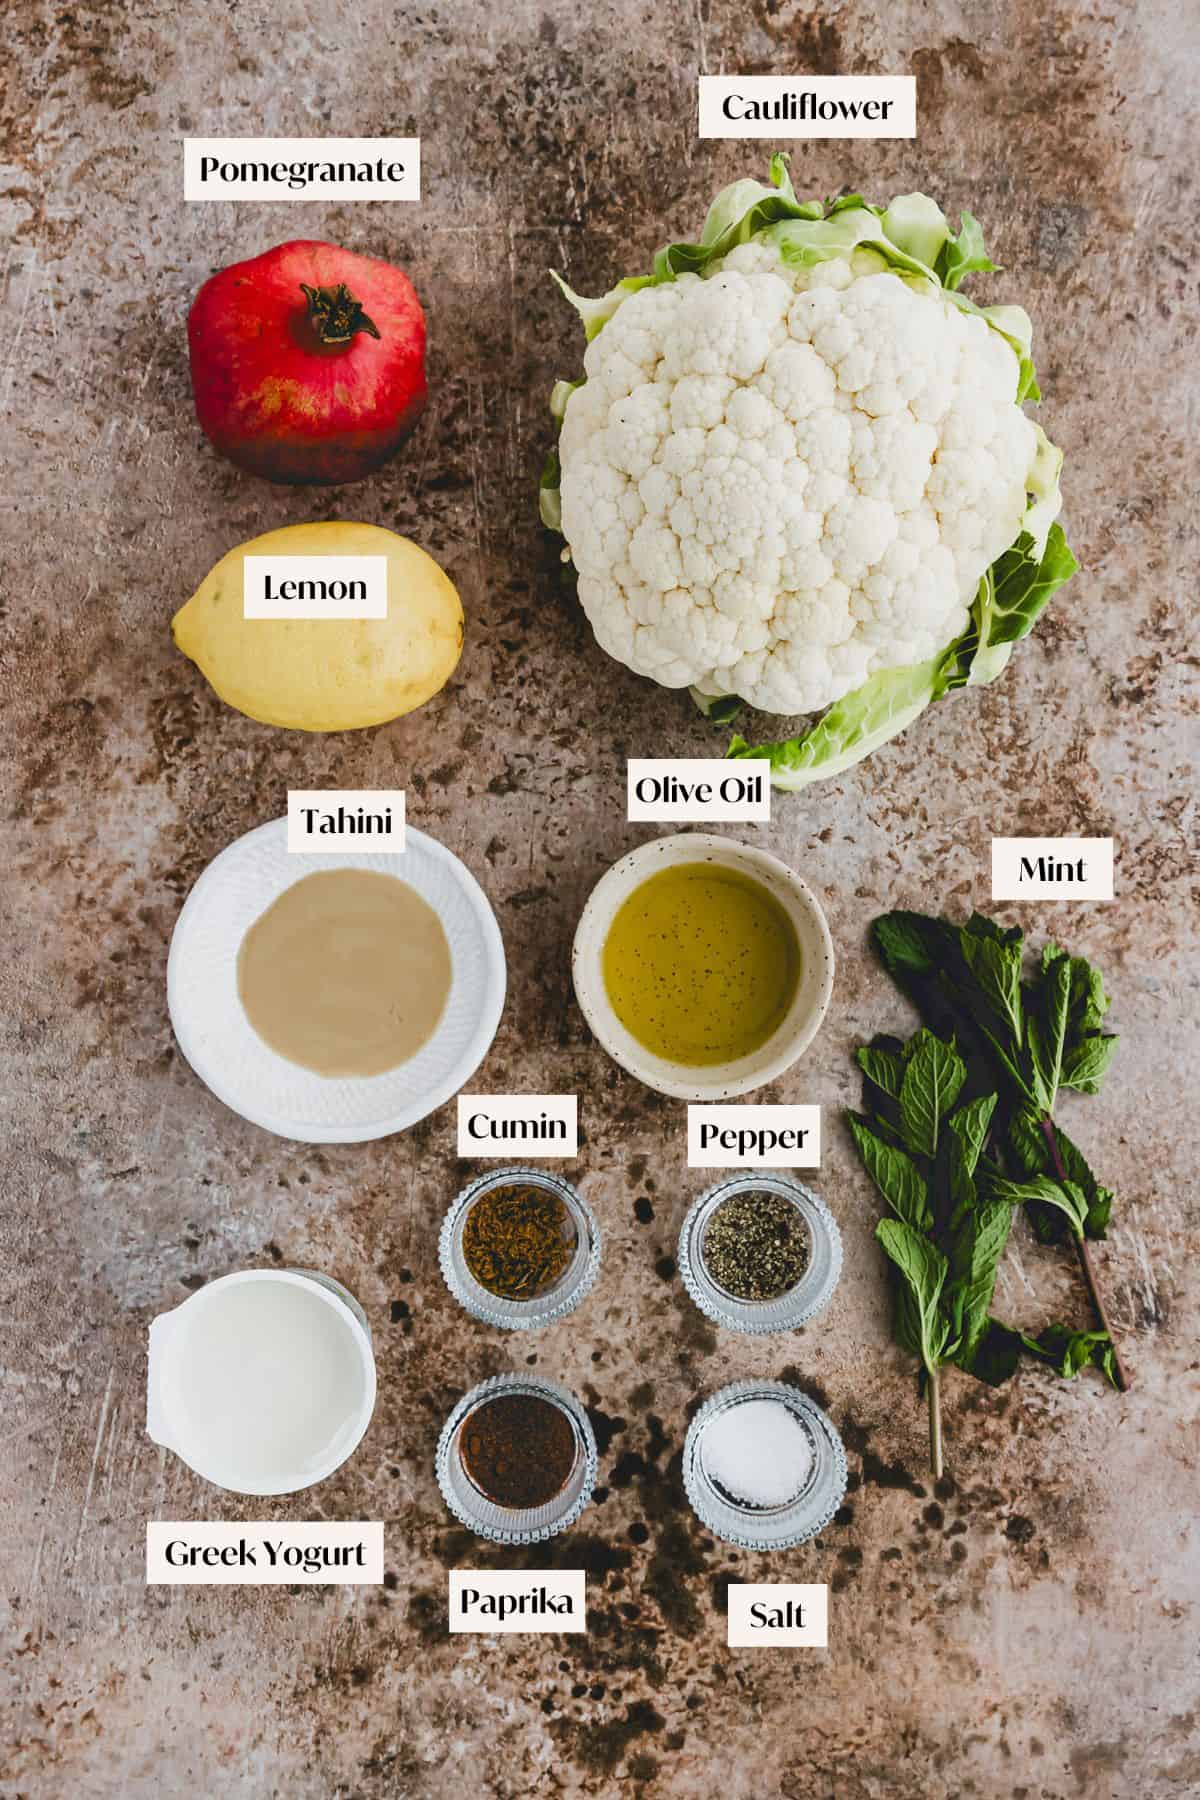 Roasted Cauliflower Ingredients